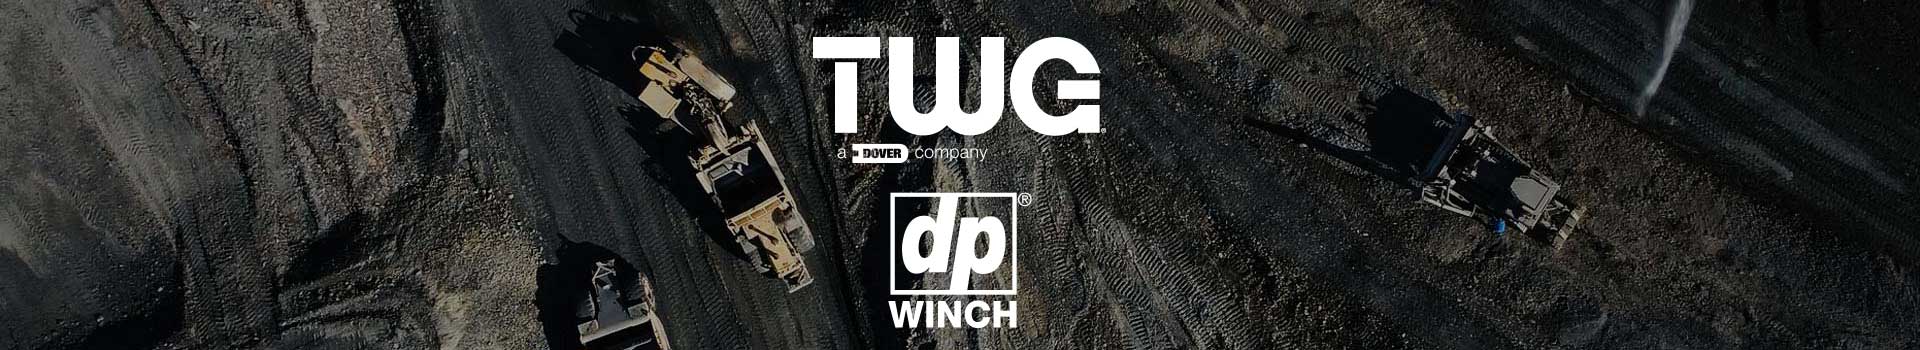 dp-Winch-Blog-Banner